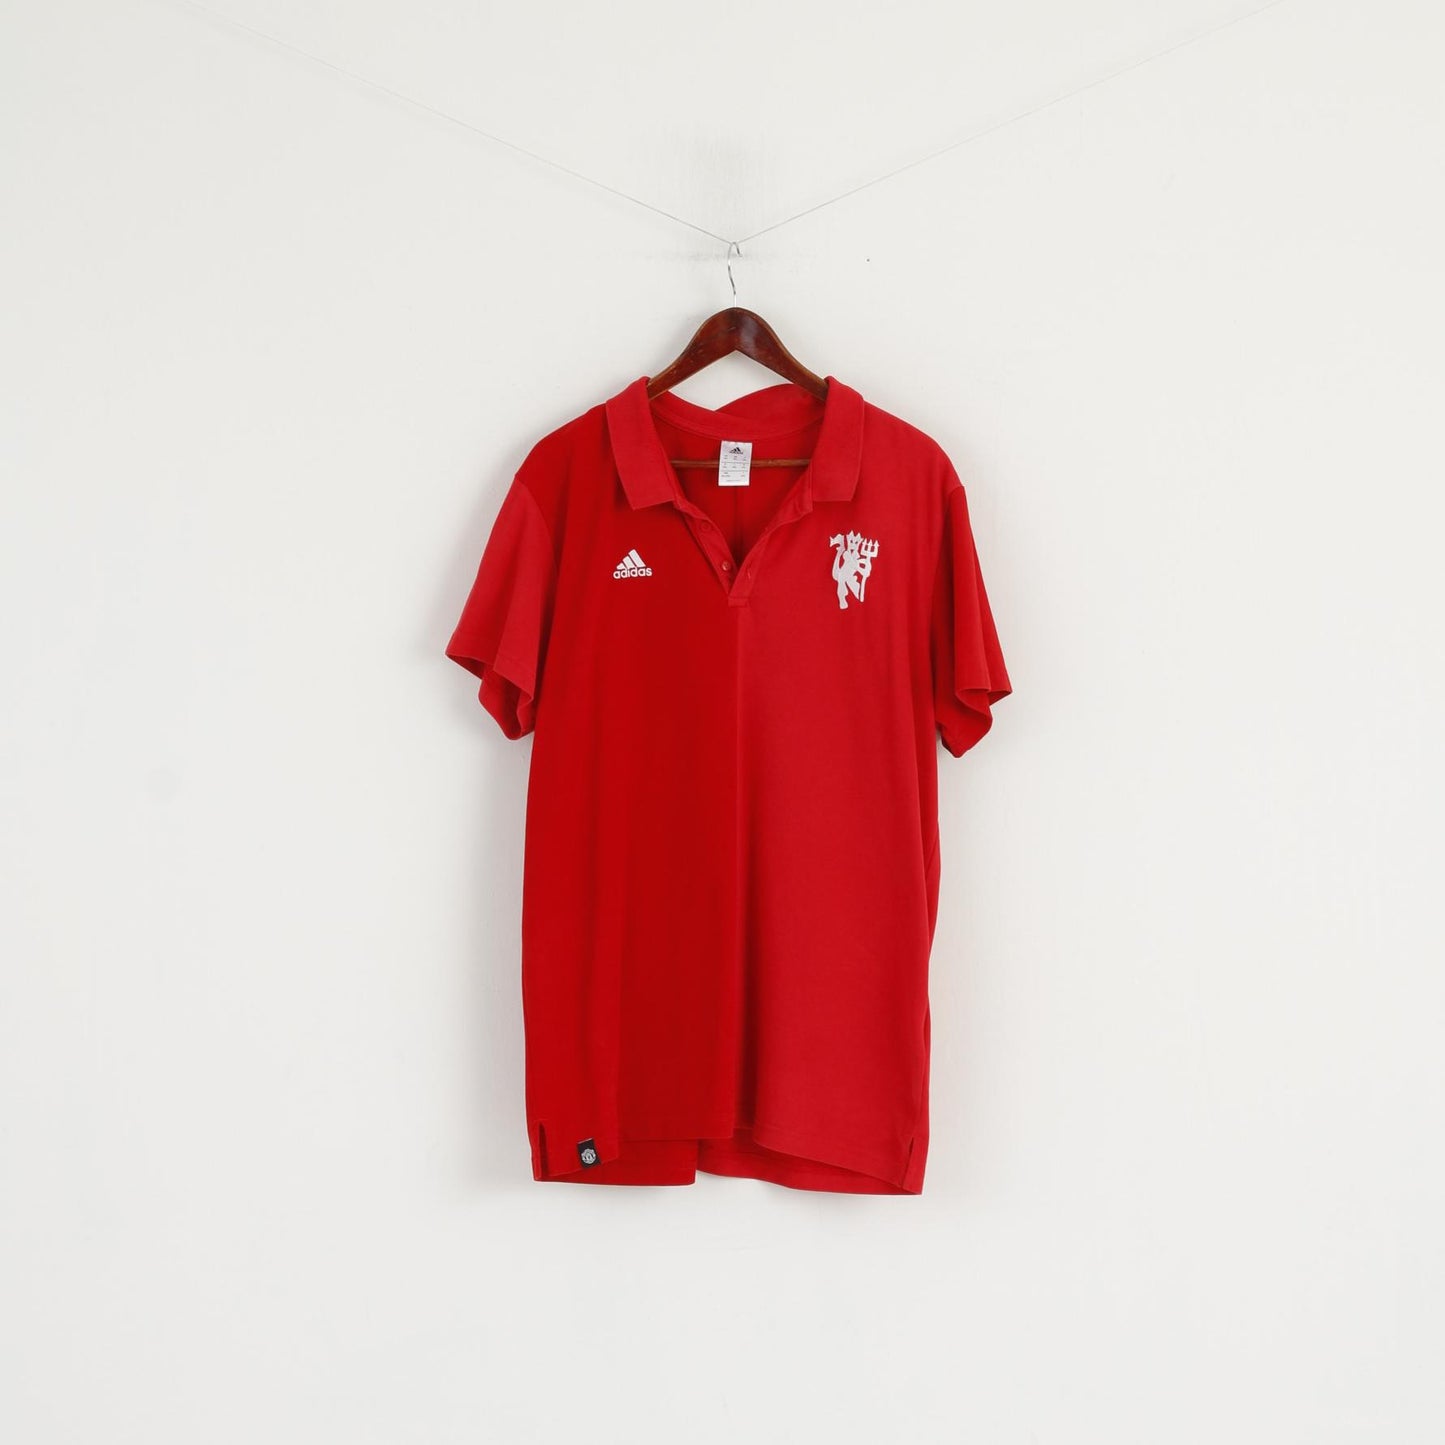 Adidas Men 2XL Polo Shirt Red Cotton Manchester United Football Devil Top